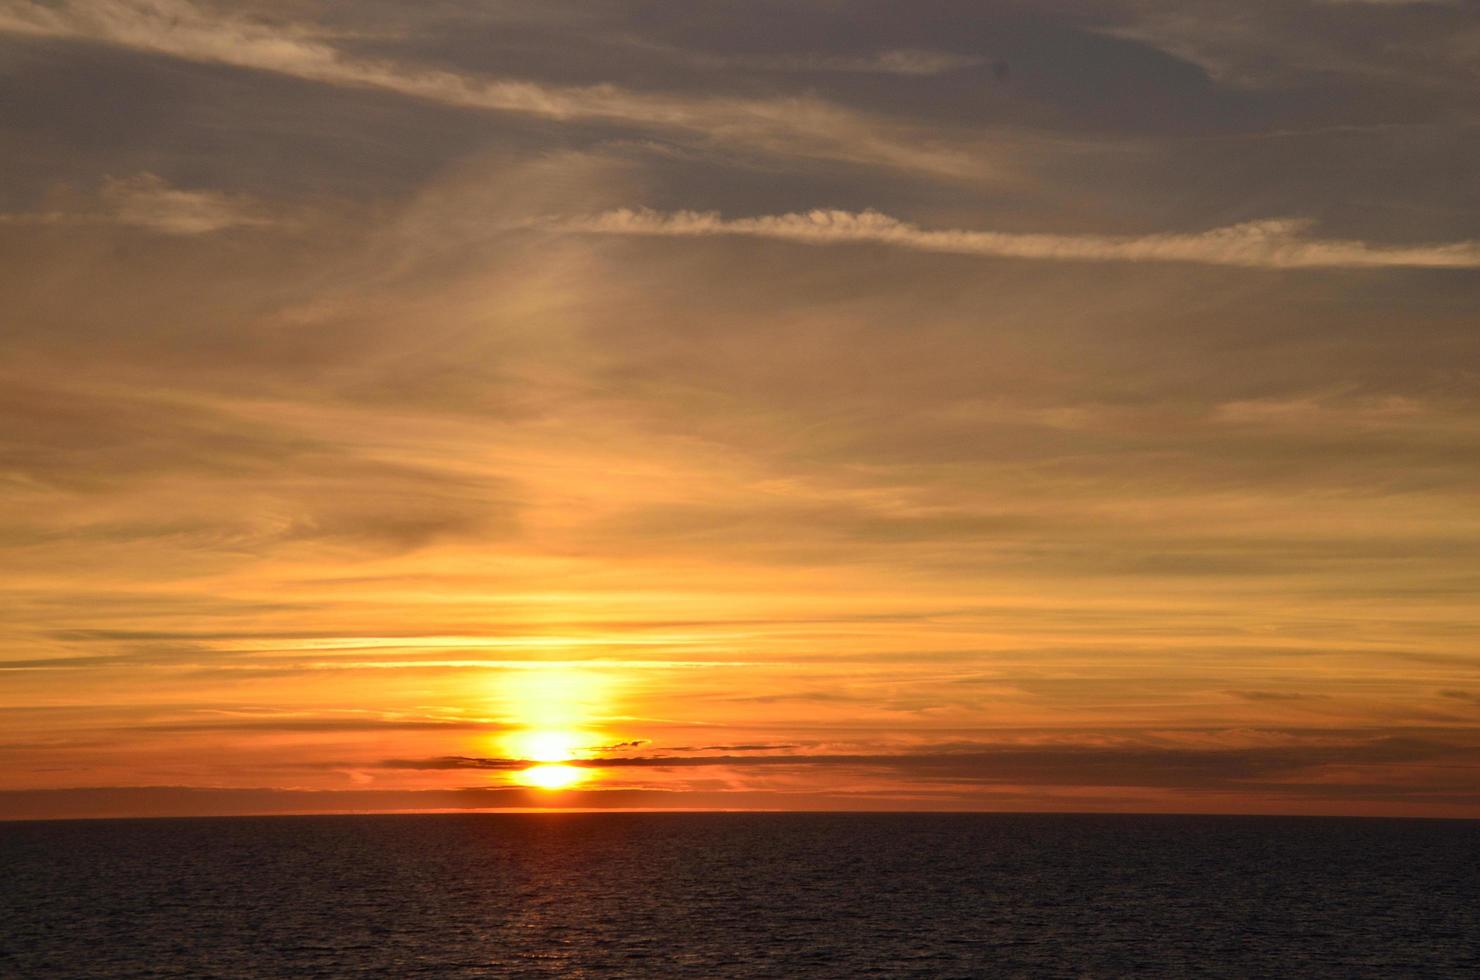 sunset and horizon at sea photo